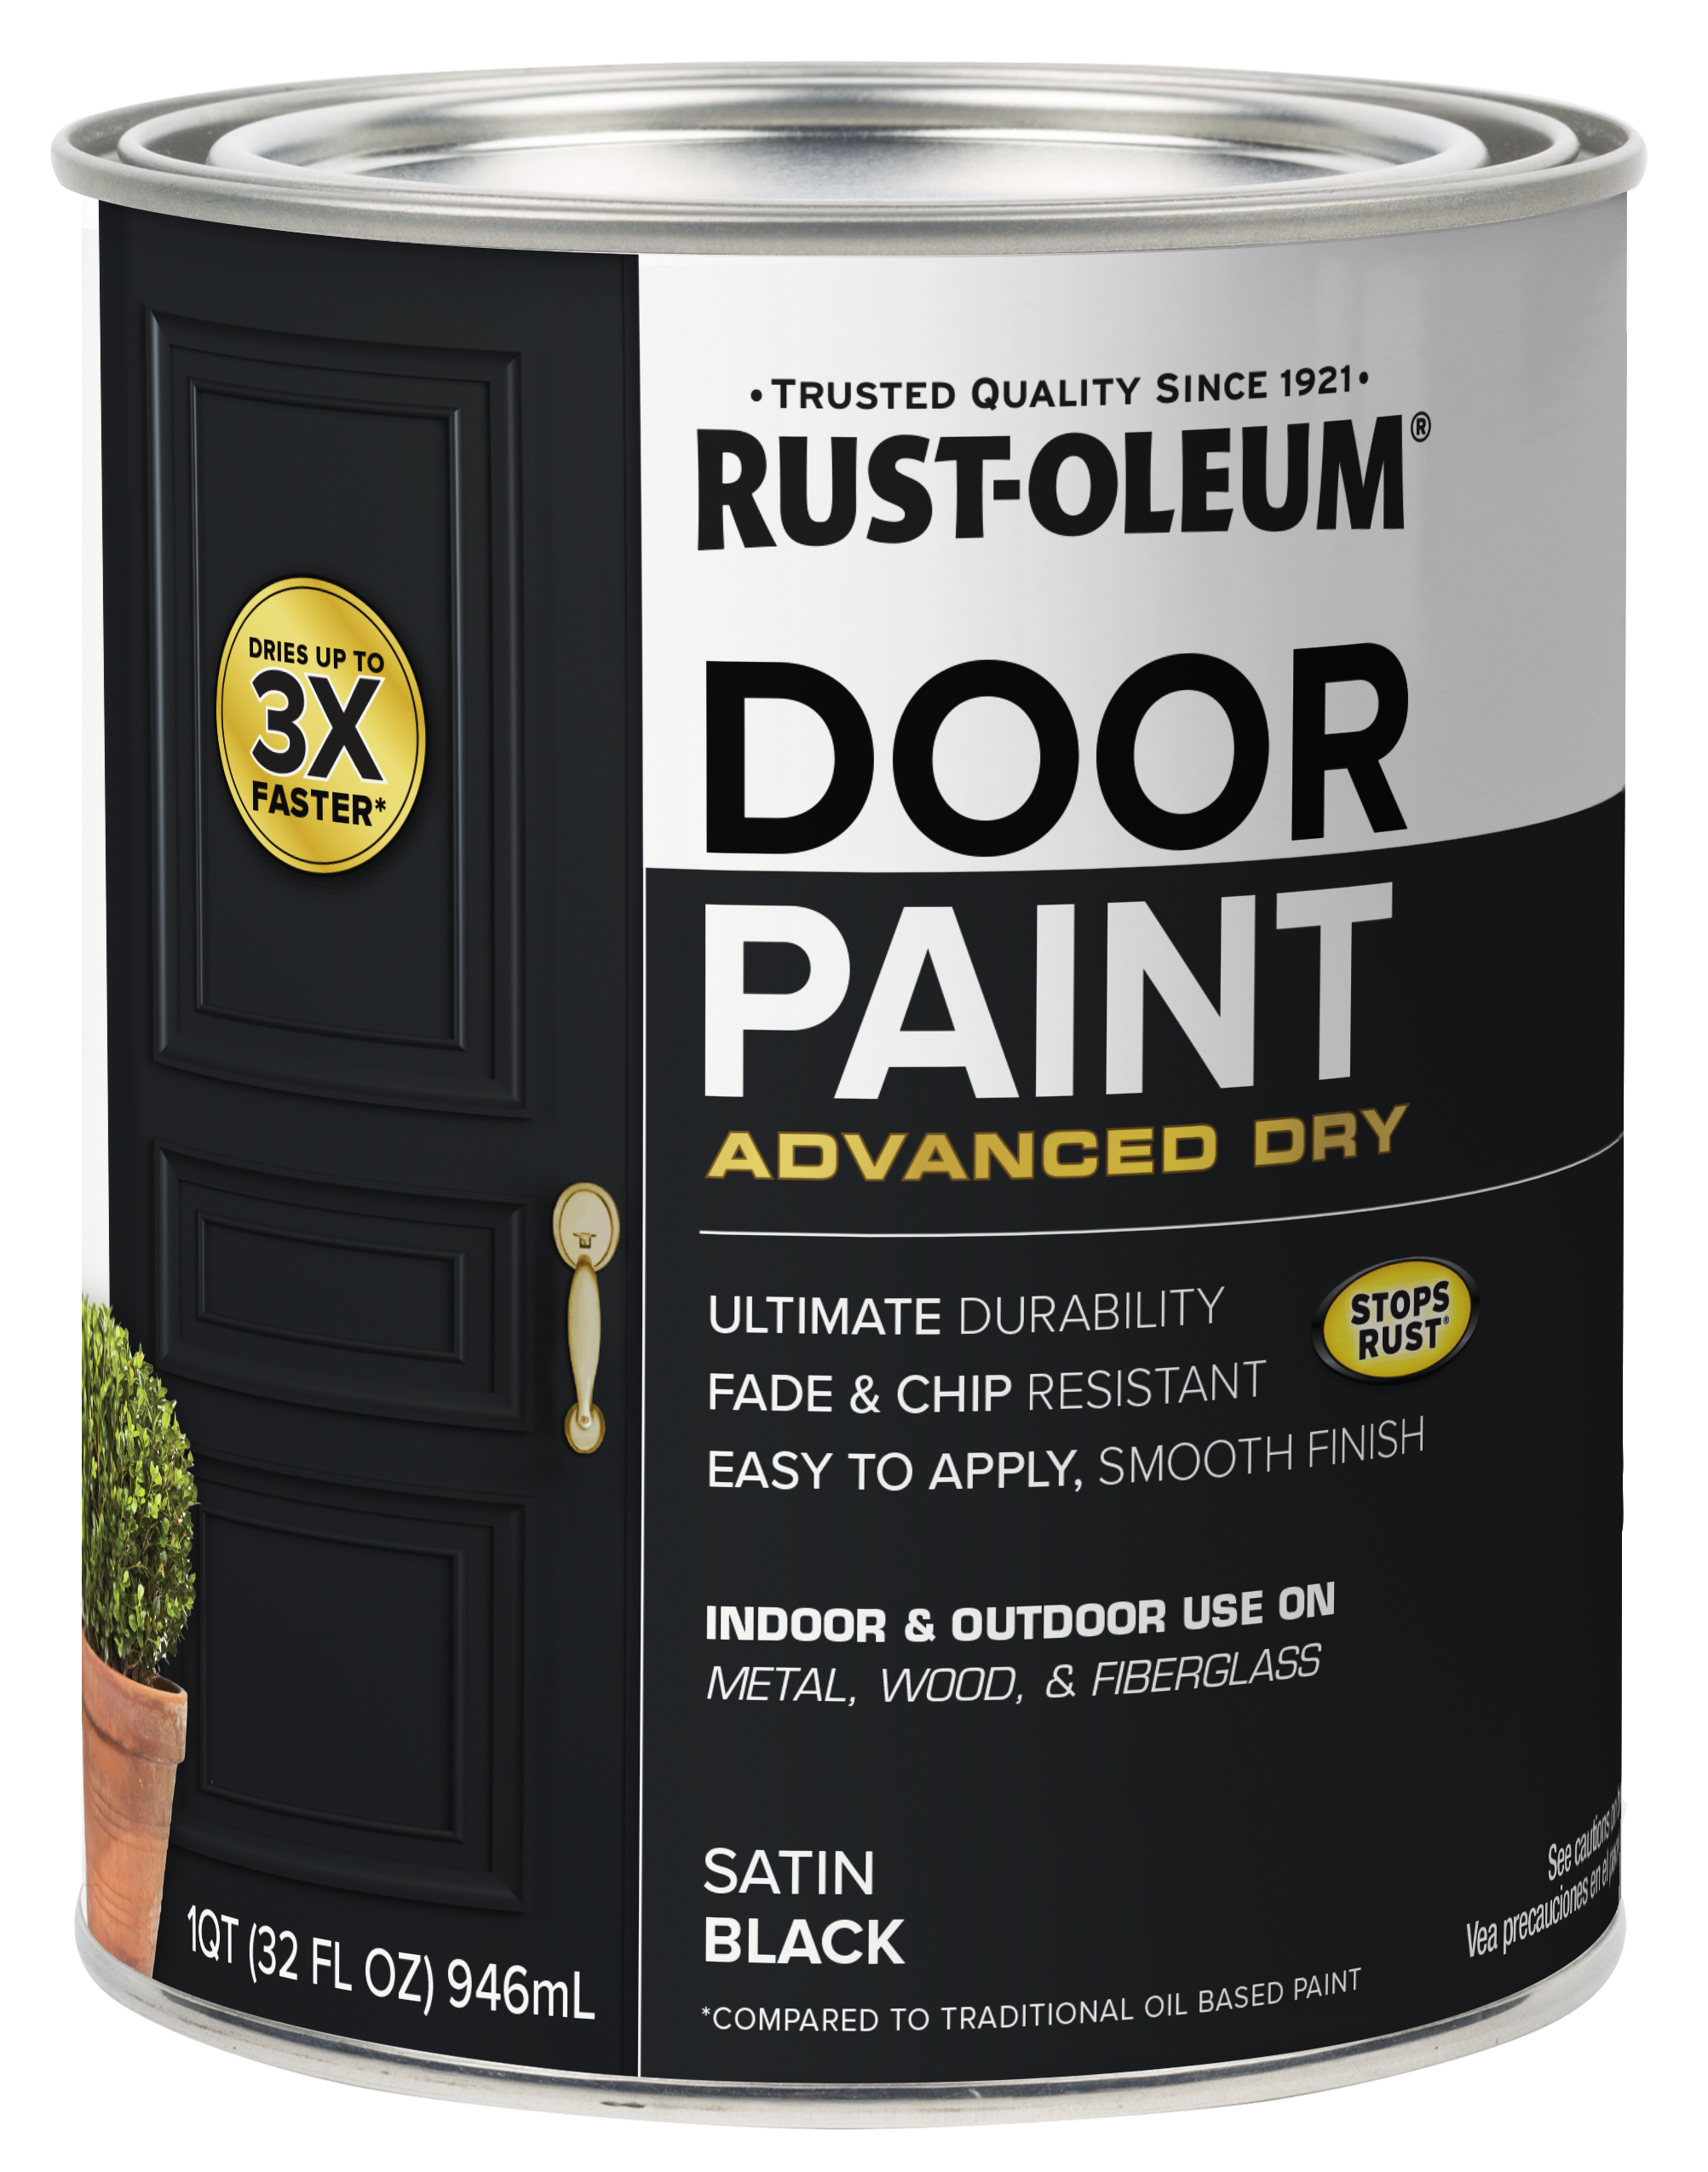 Rust-Oleum Stops Rust 1 Qt. Protective Enamel Semi-Gloss White Interior/Exterior Paint (2-Pack)